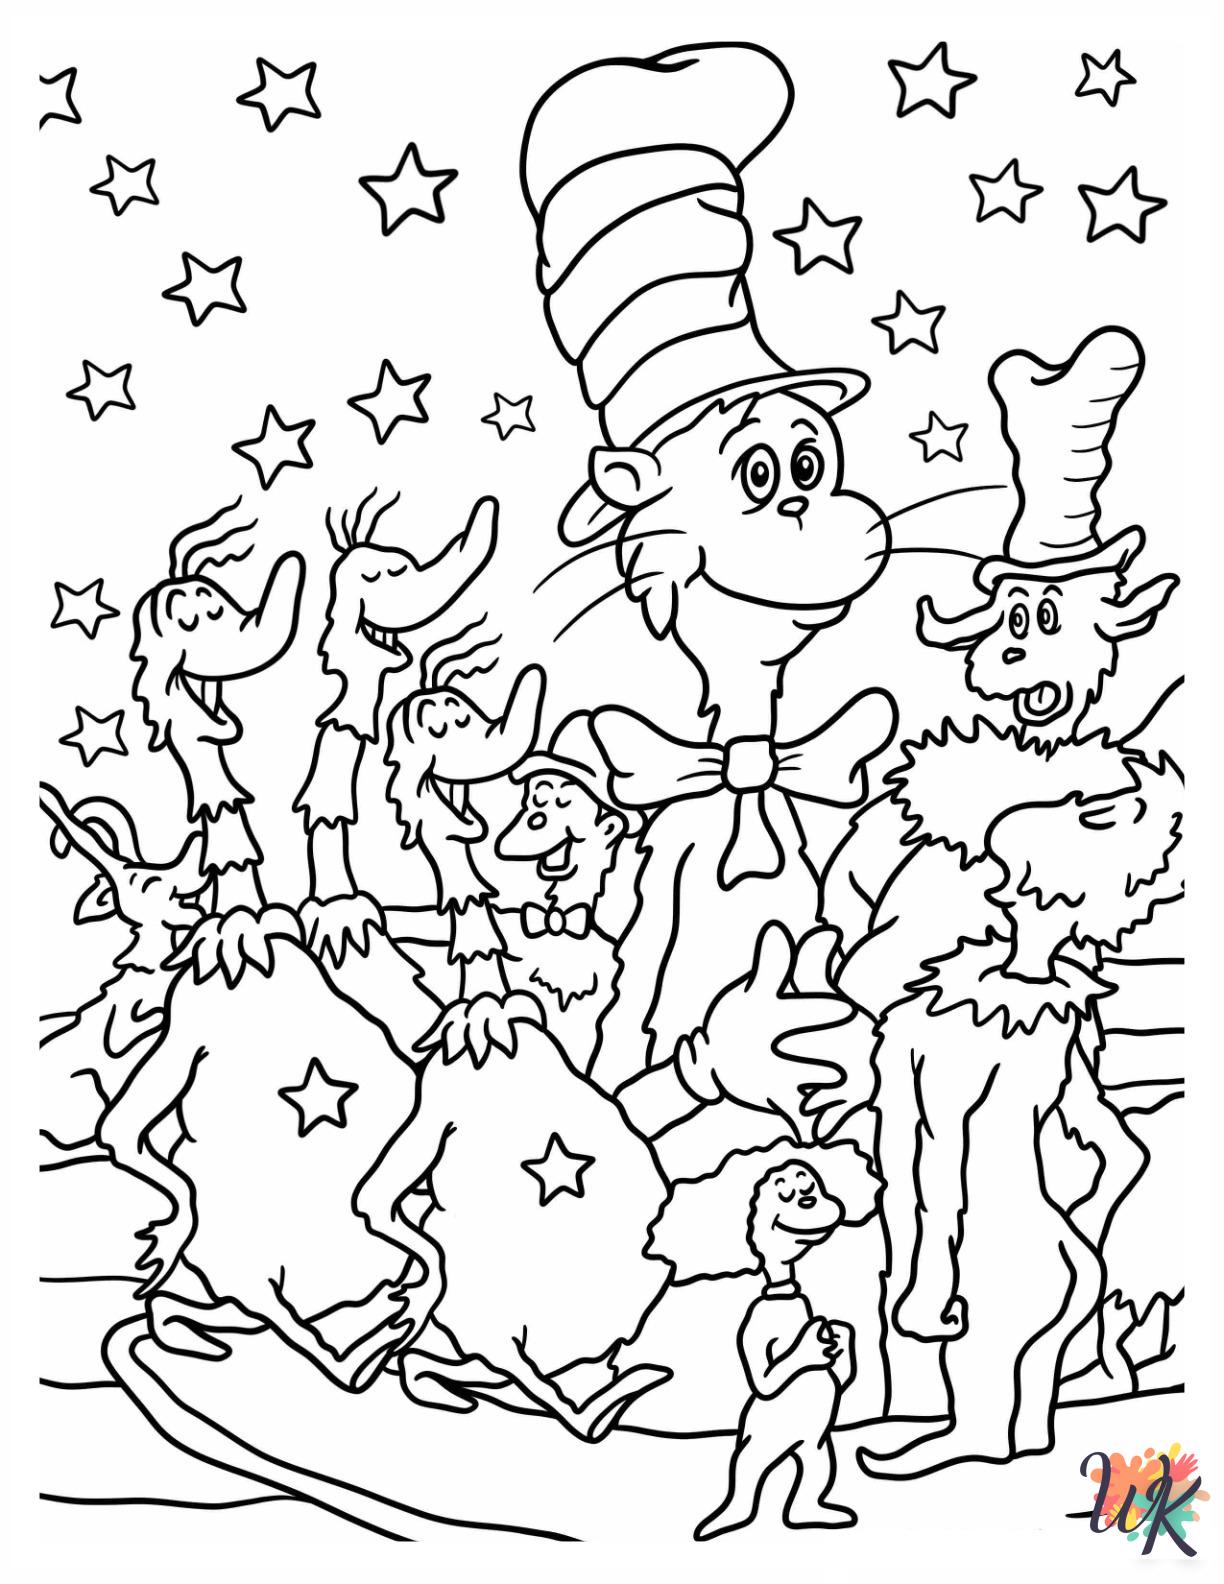 Dr. Seuss free coloring pages